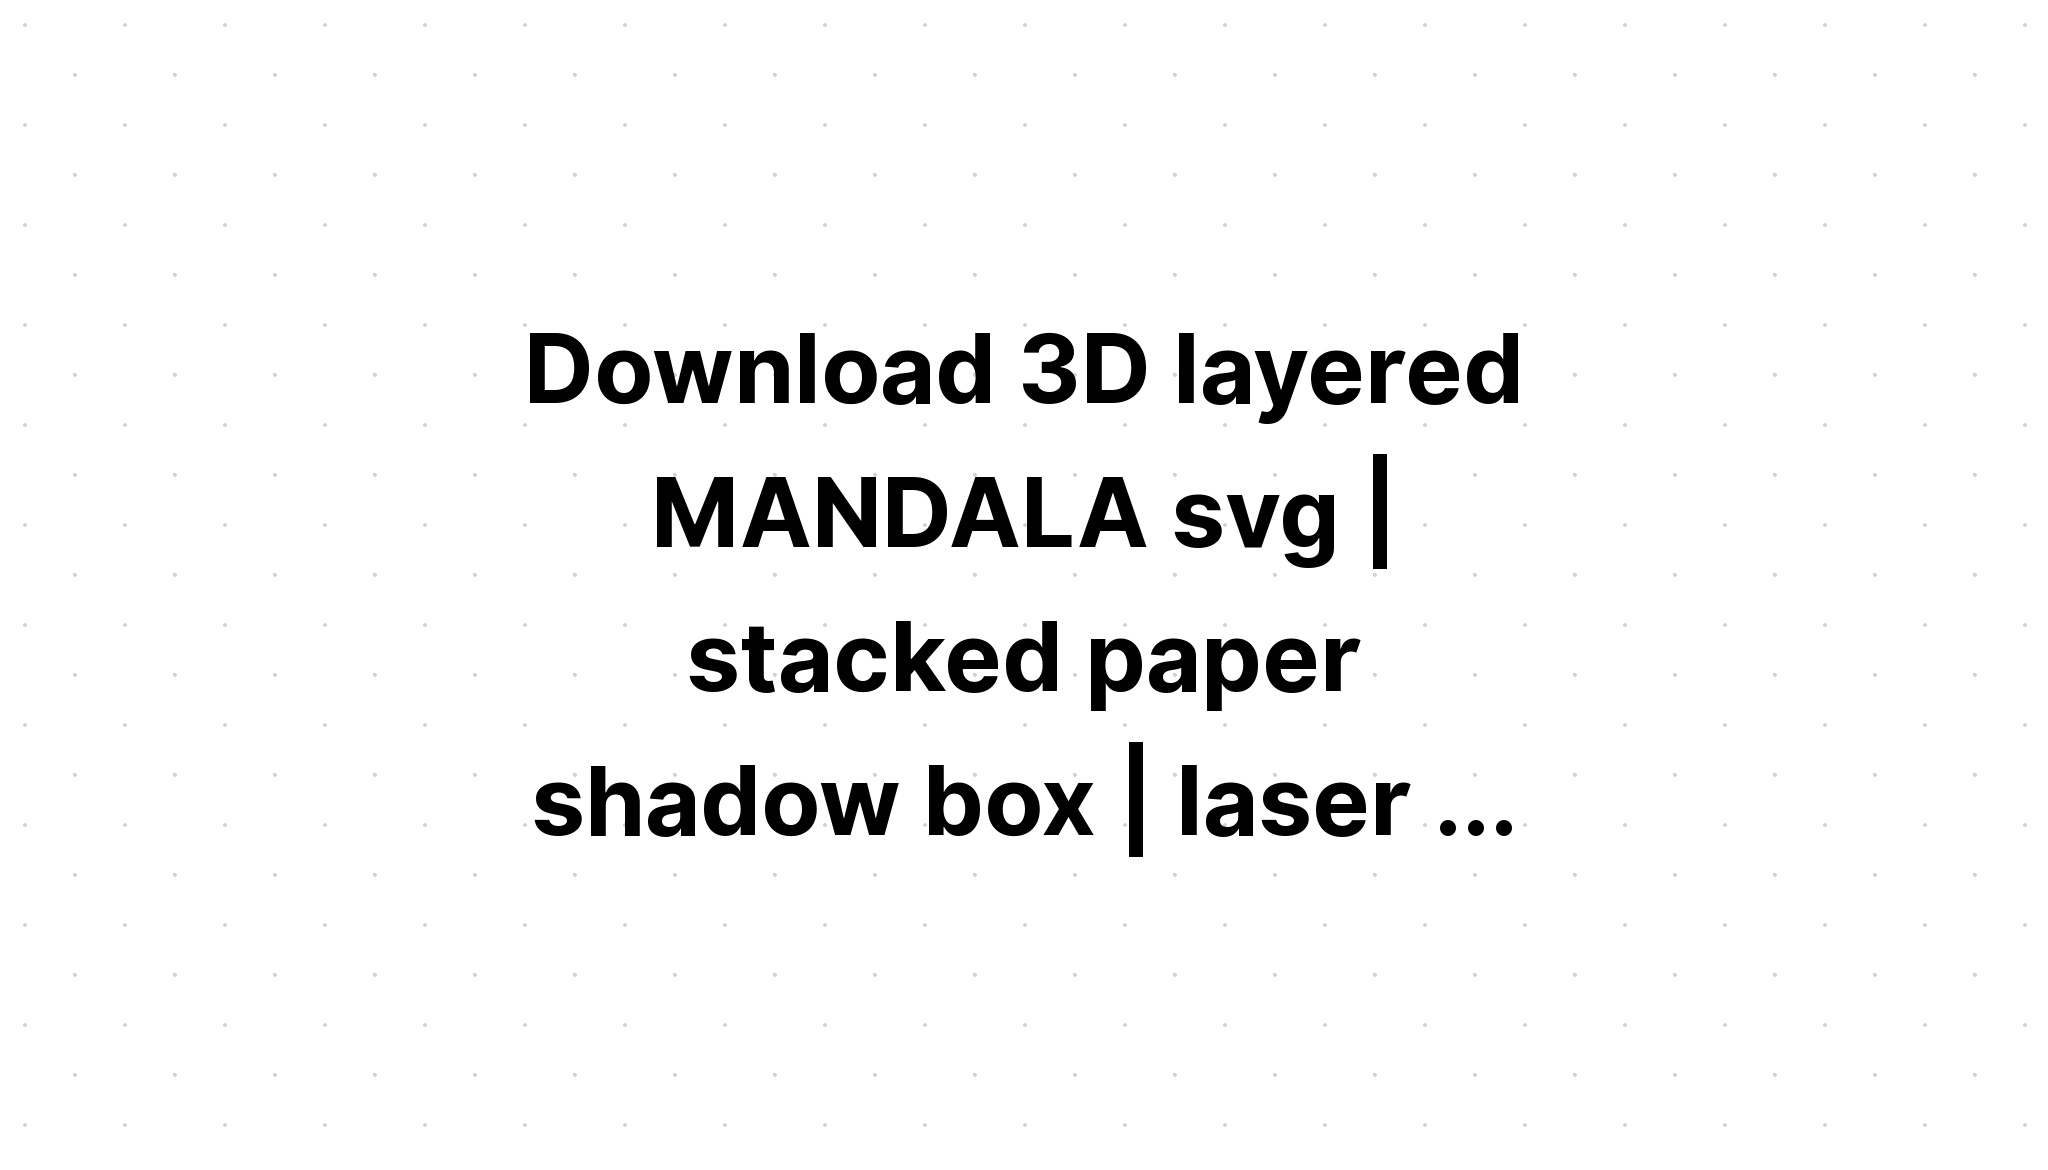 Download Hedgehog Mandala Layered Svg Free - Free Layered SVG Files